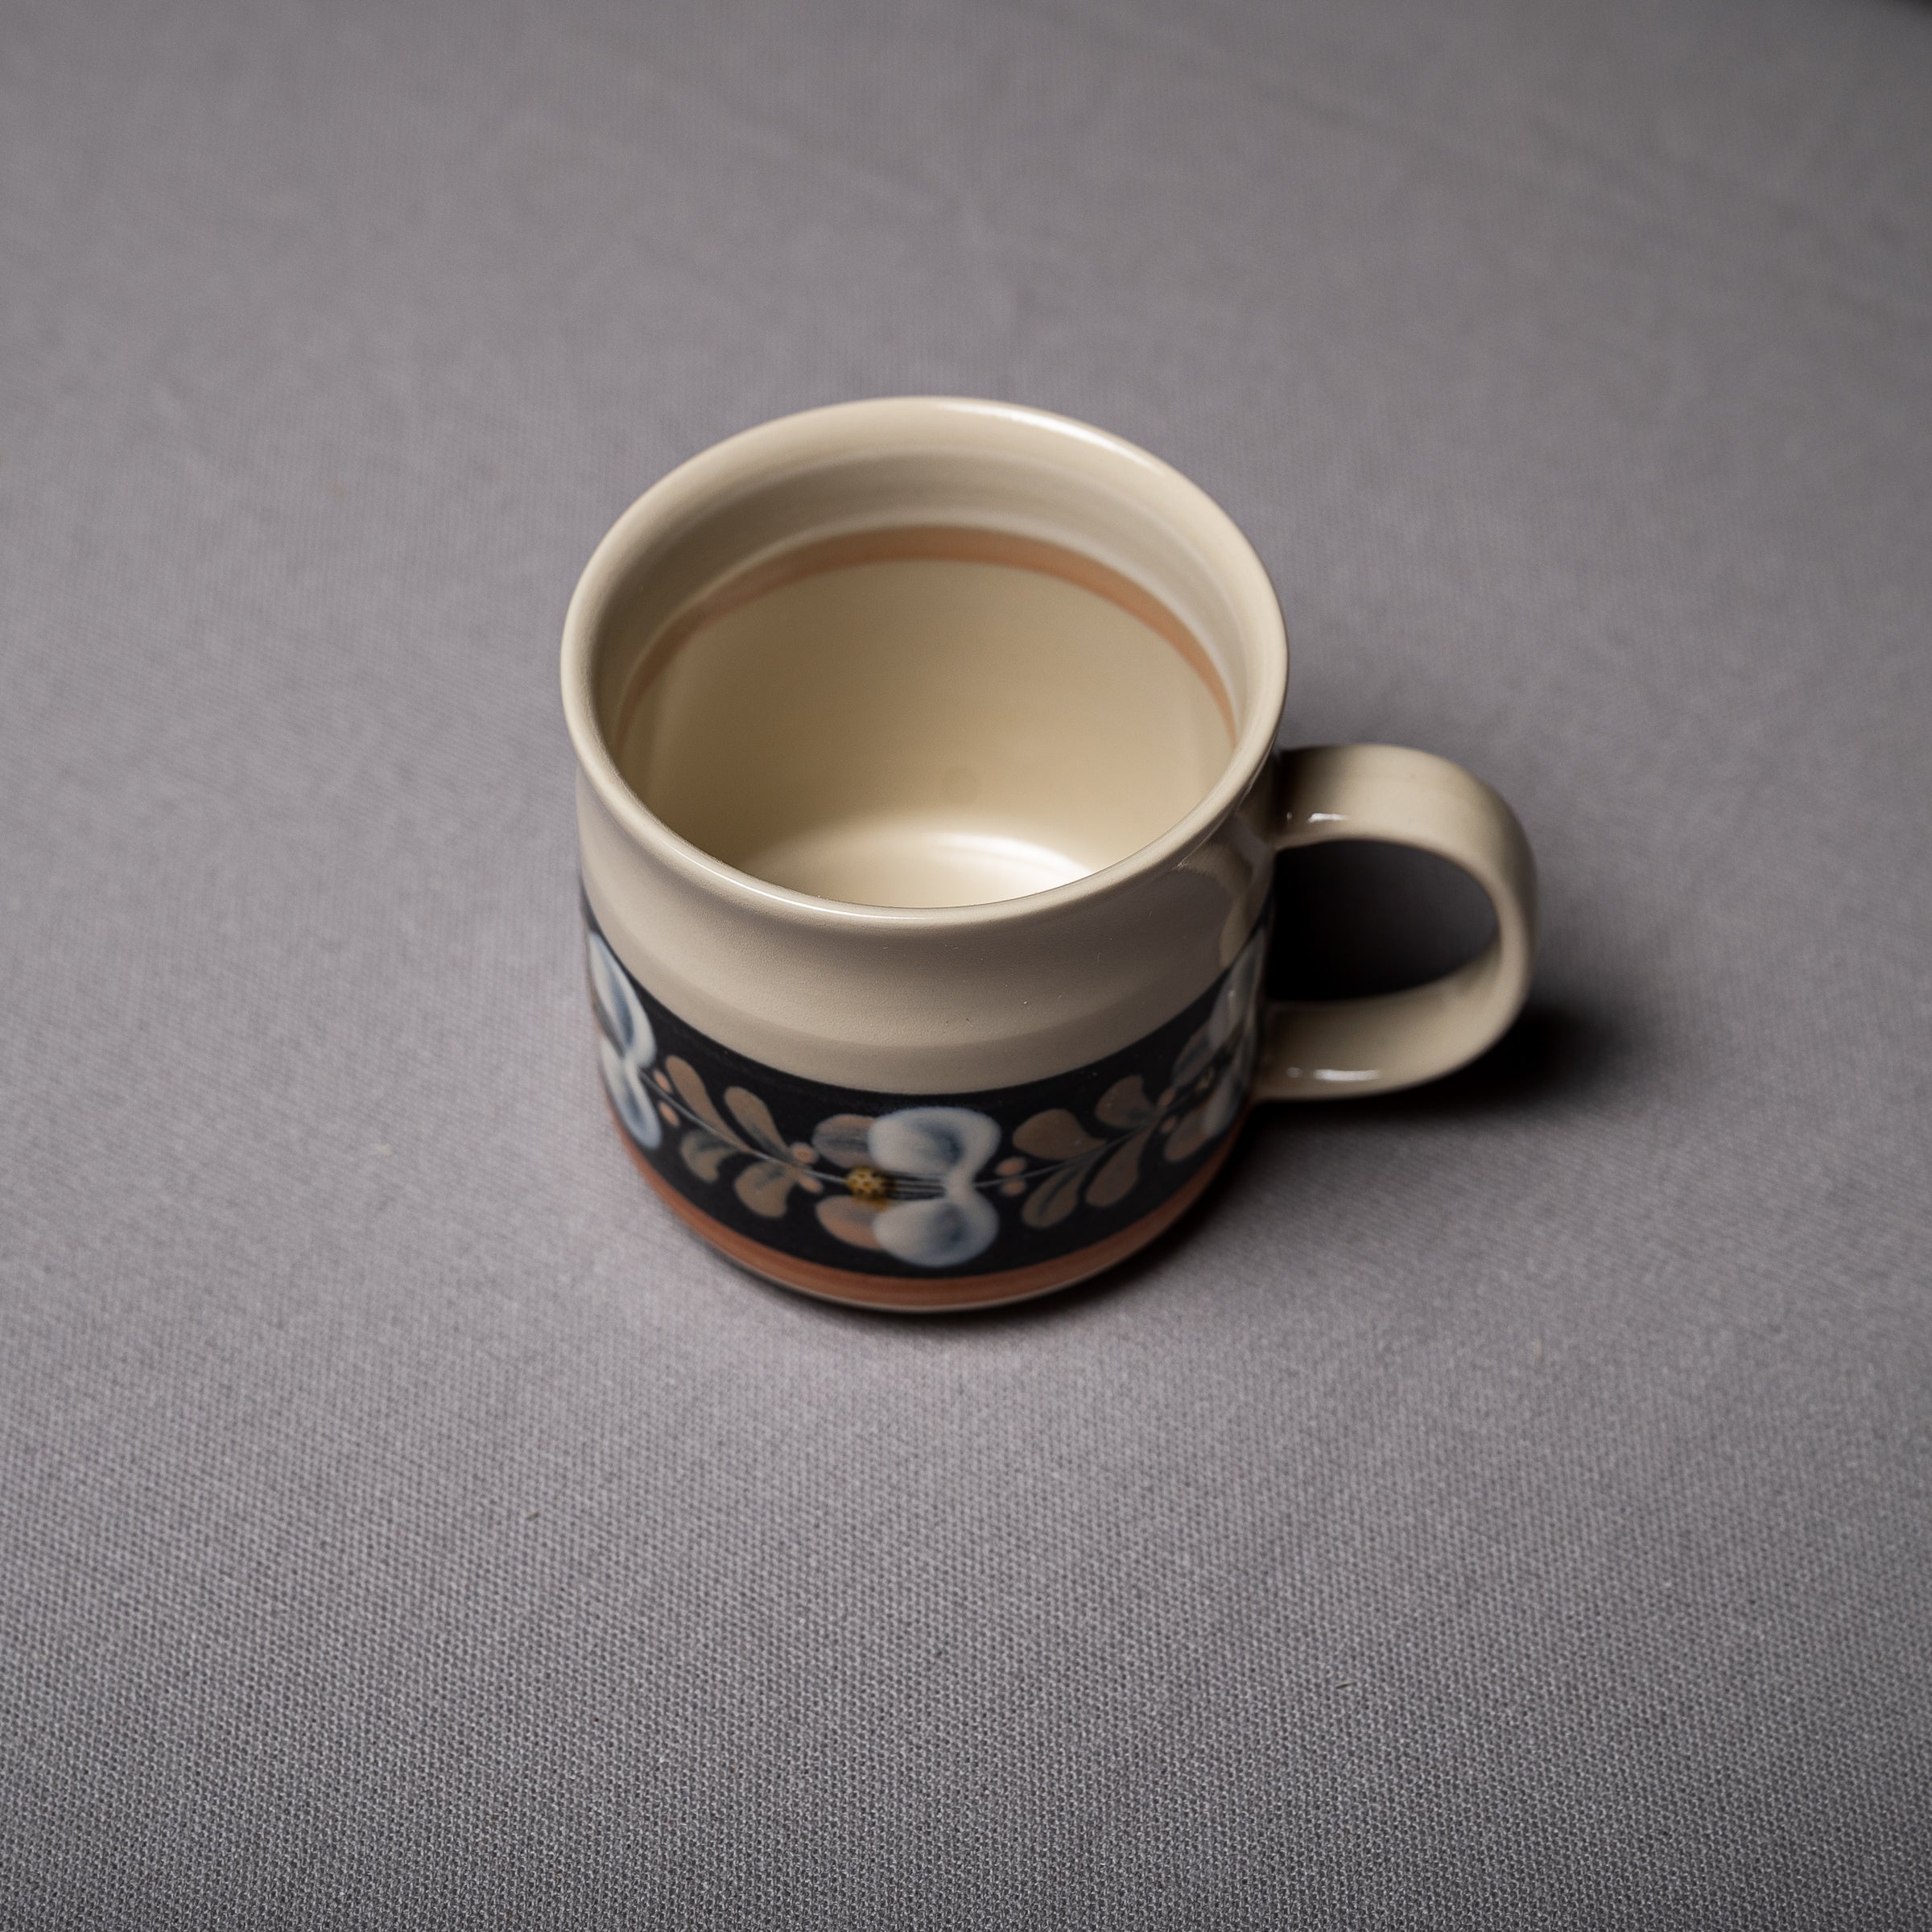 Fukube Mug Cup - Violets or Camellia / ふくべ 窯